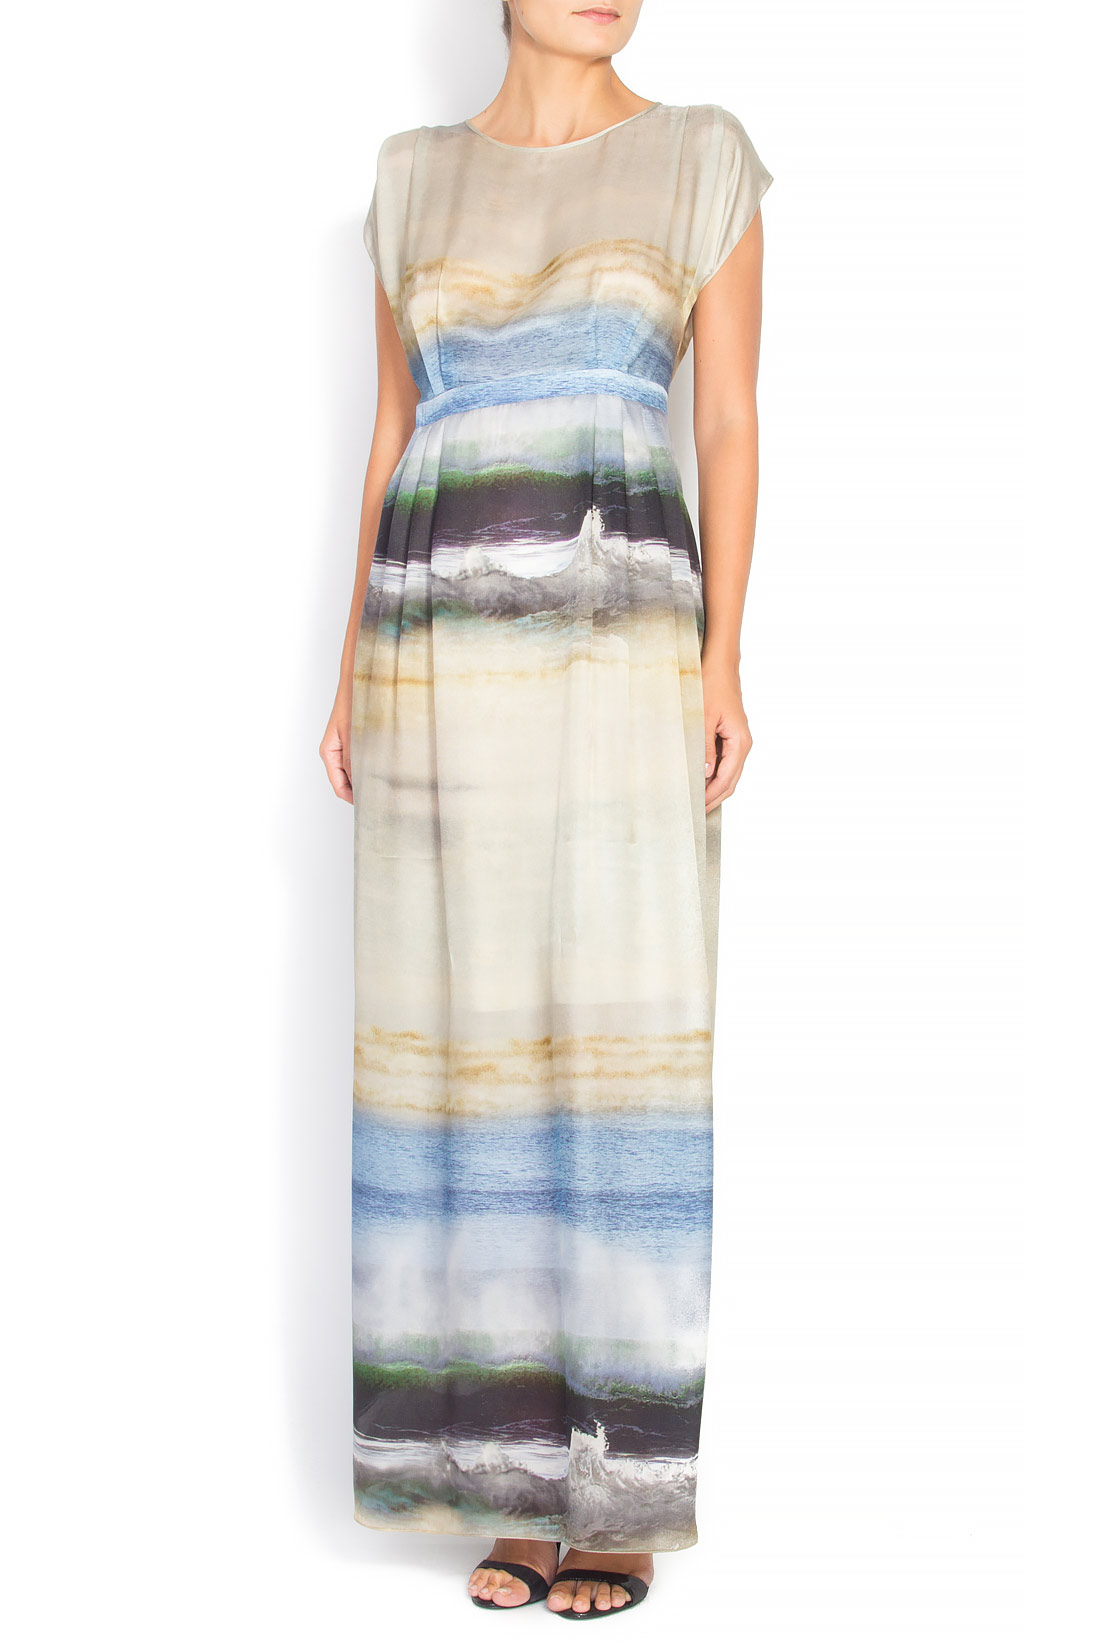 Printed silk dress Claudia Castrase image 0